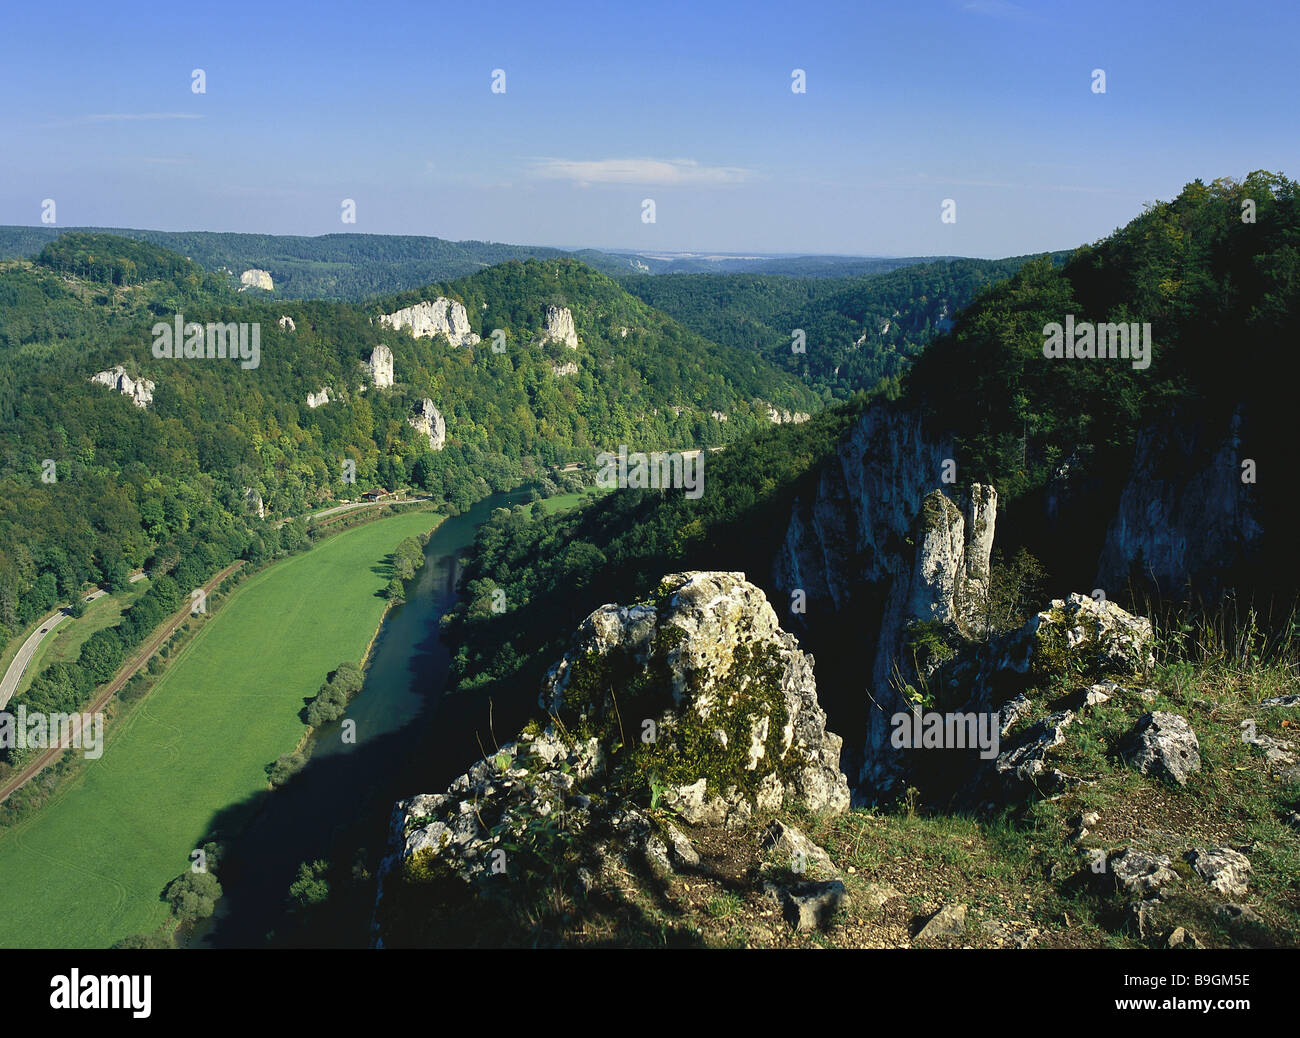 https://c8.alamy.com/comp/B9GM5E/view-view-baden-wrttemberg-mountain-gaze-falcon-stone-castle-place-B9GM5E.jpg